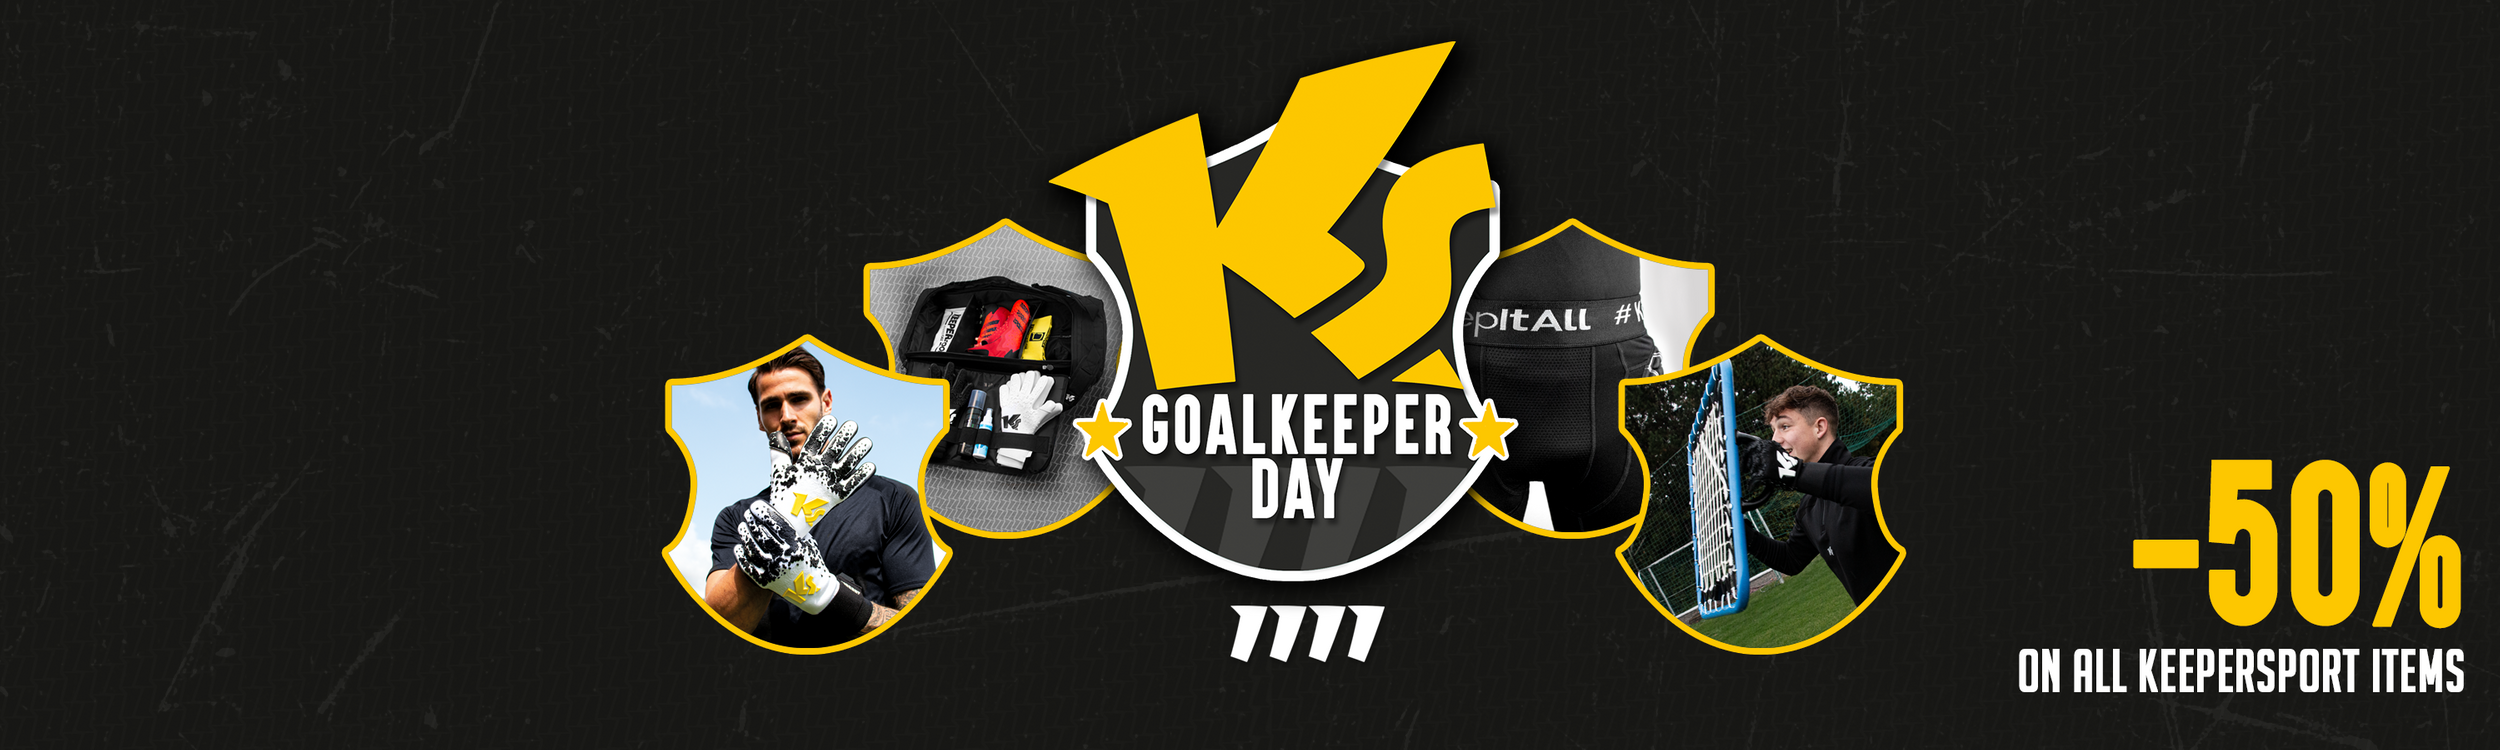 Goalkeeper Day